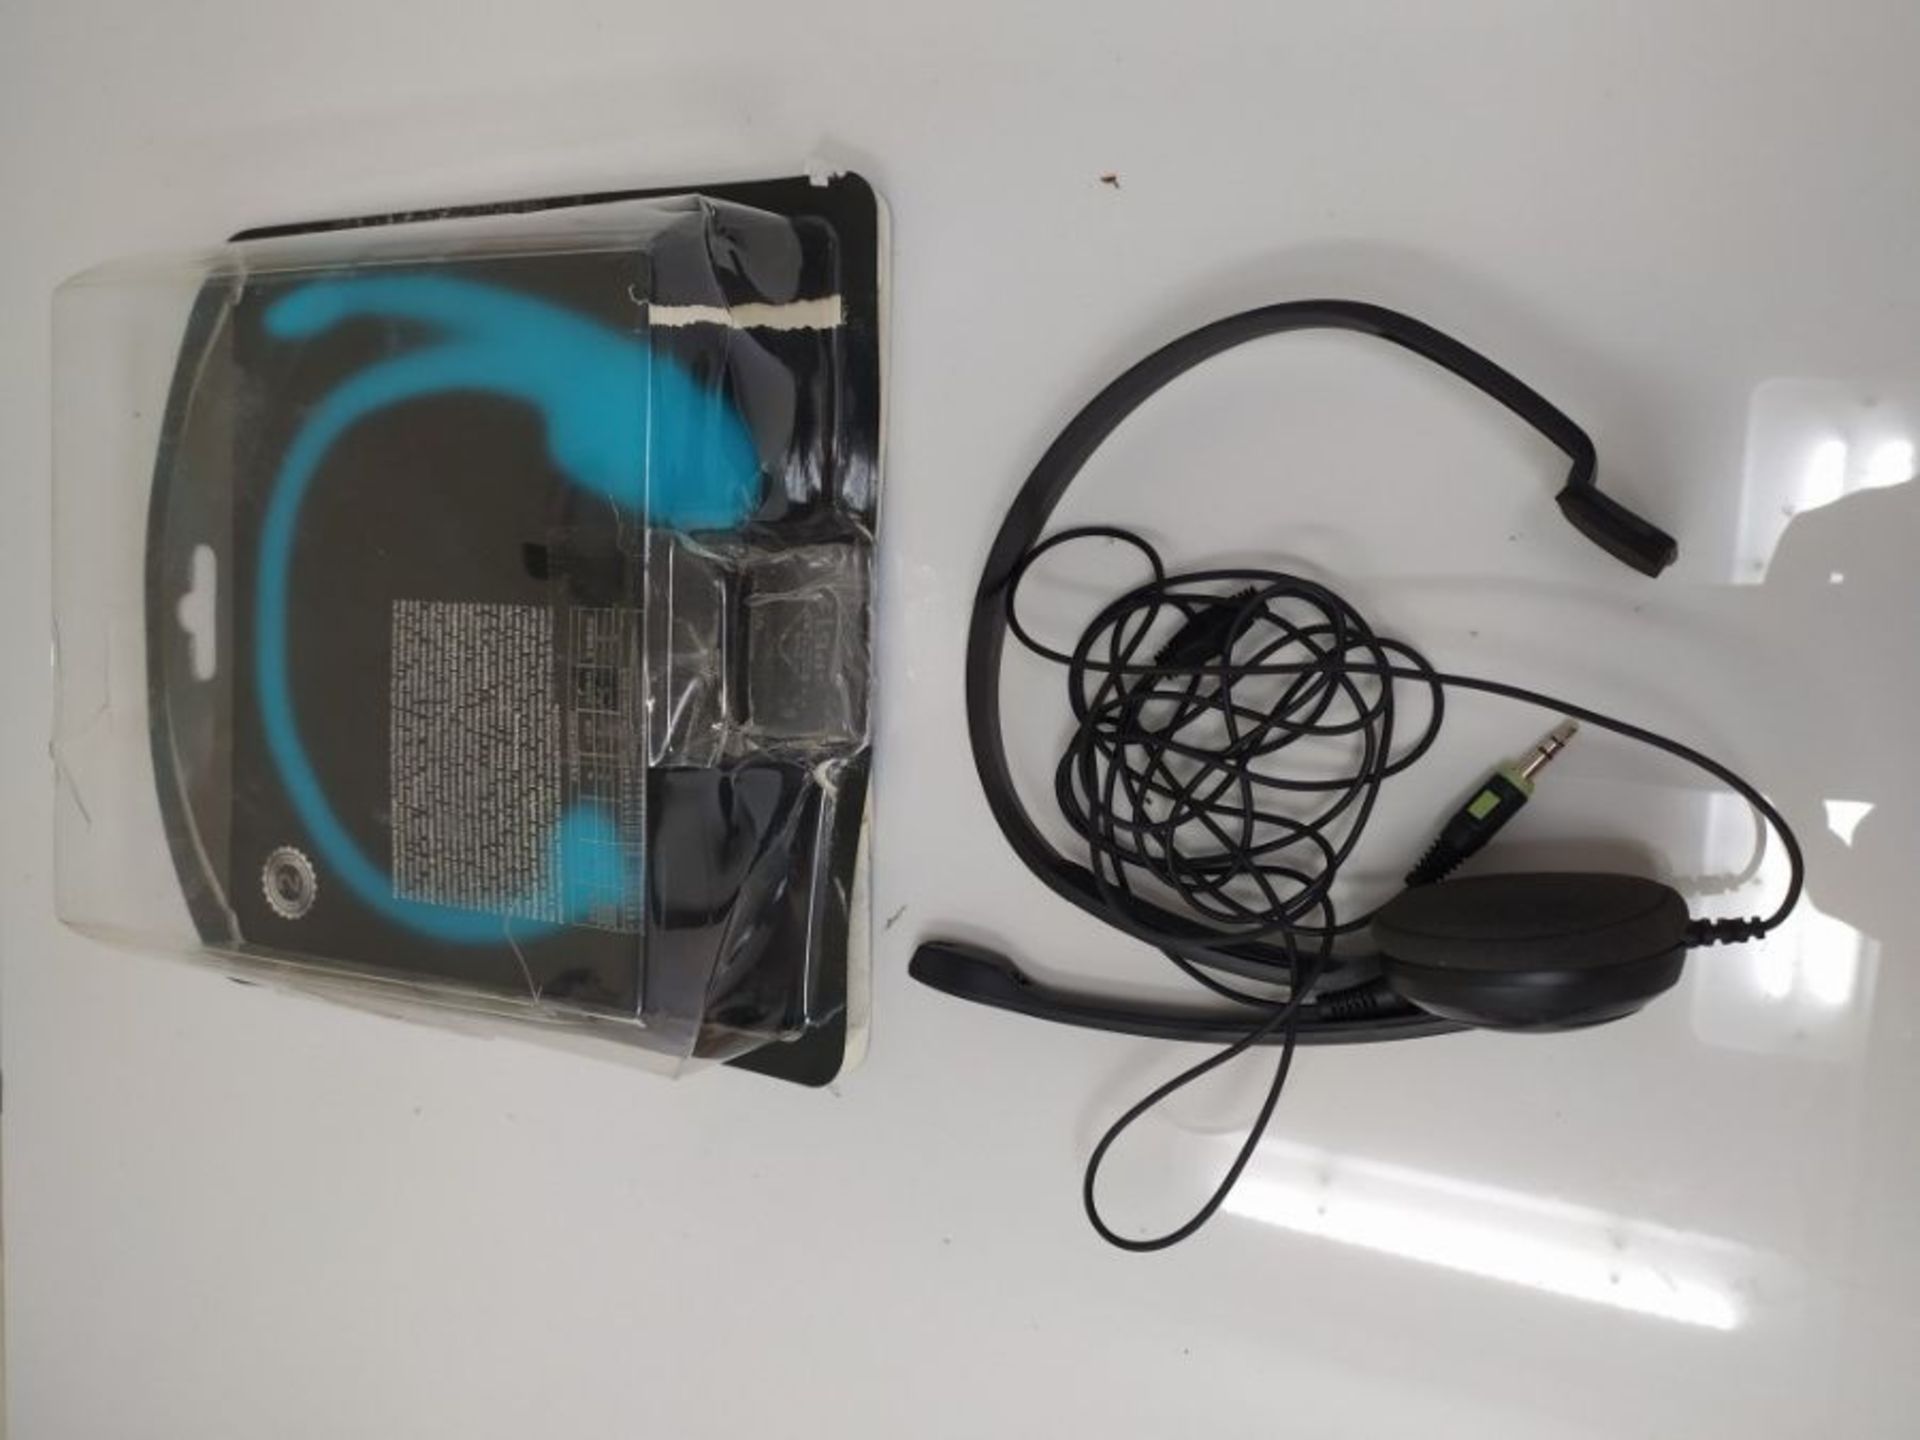 Sennheiser PC 2 CHAT Lightweight Telephony On-Ear Headset - Black - Image 2 of 2